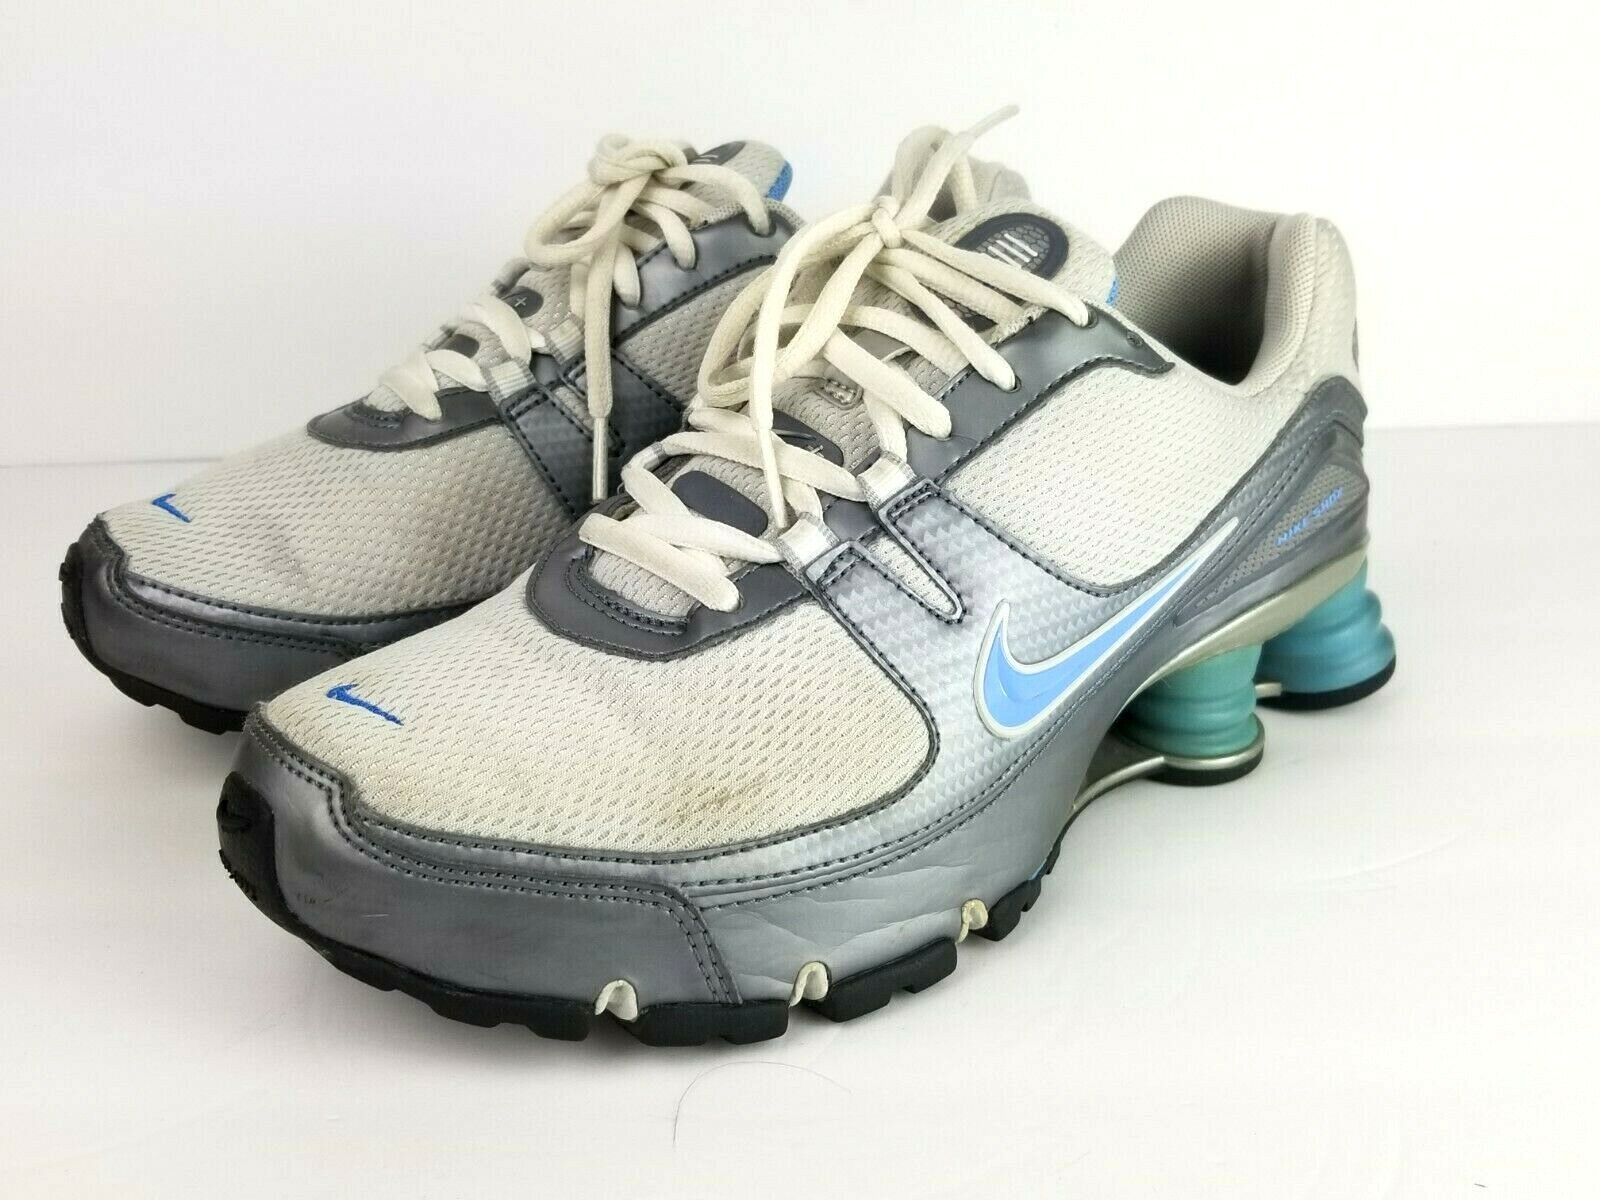 Nike Women's SHOX Turbo Silver/White/Teal V 5 Shoes Size 8 316874 041